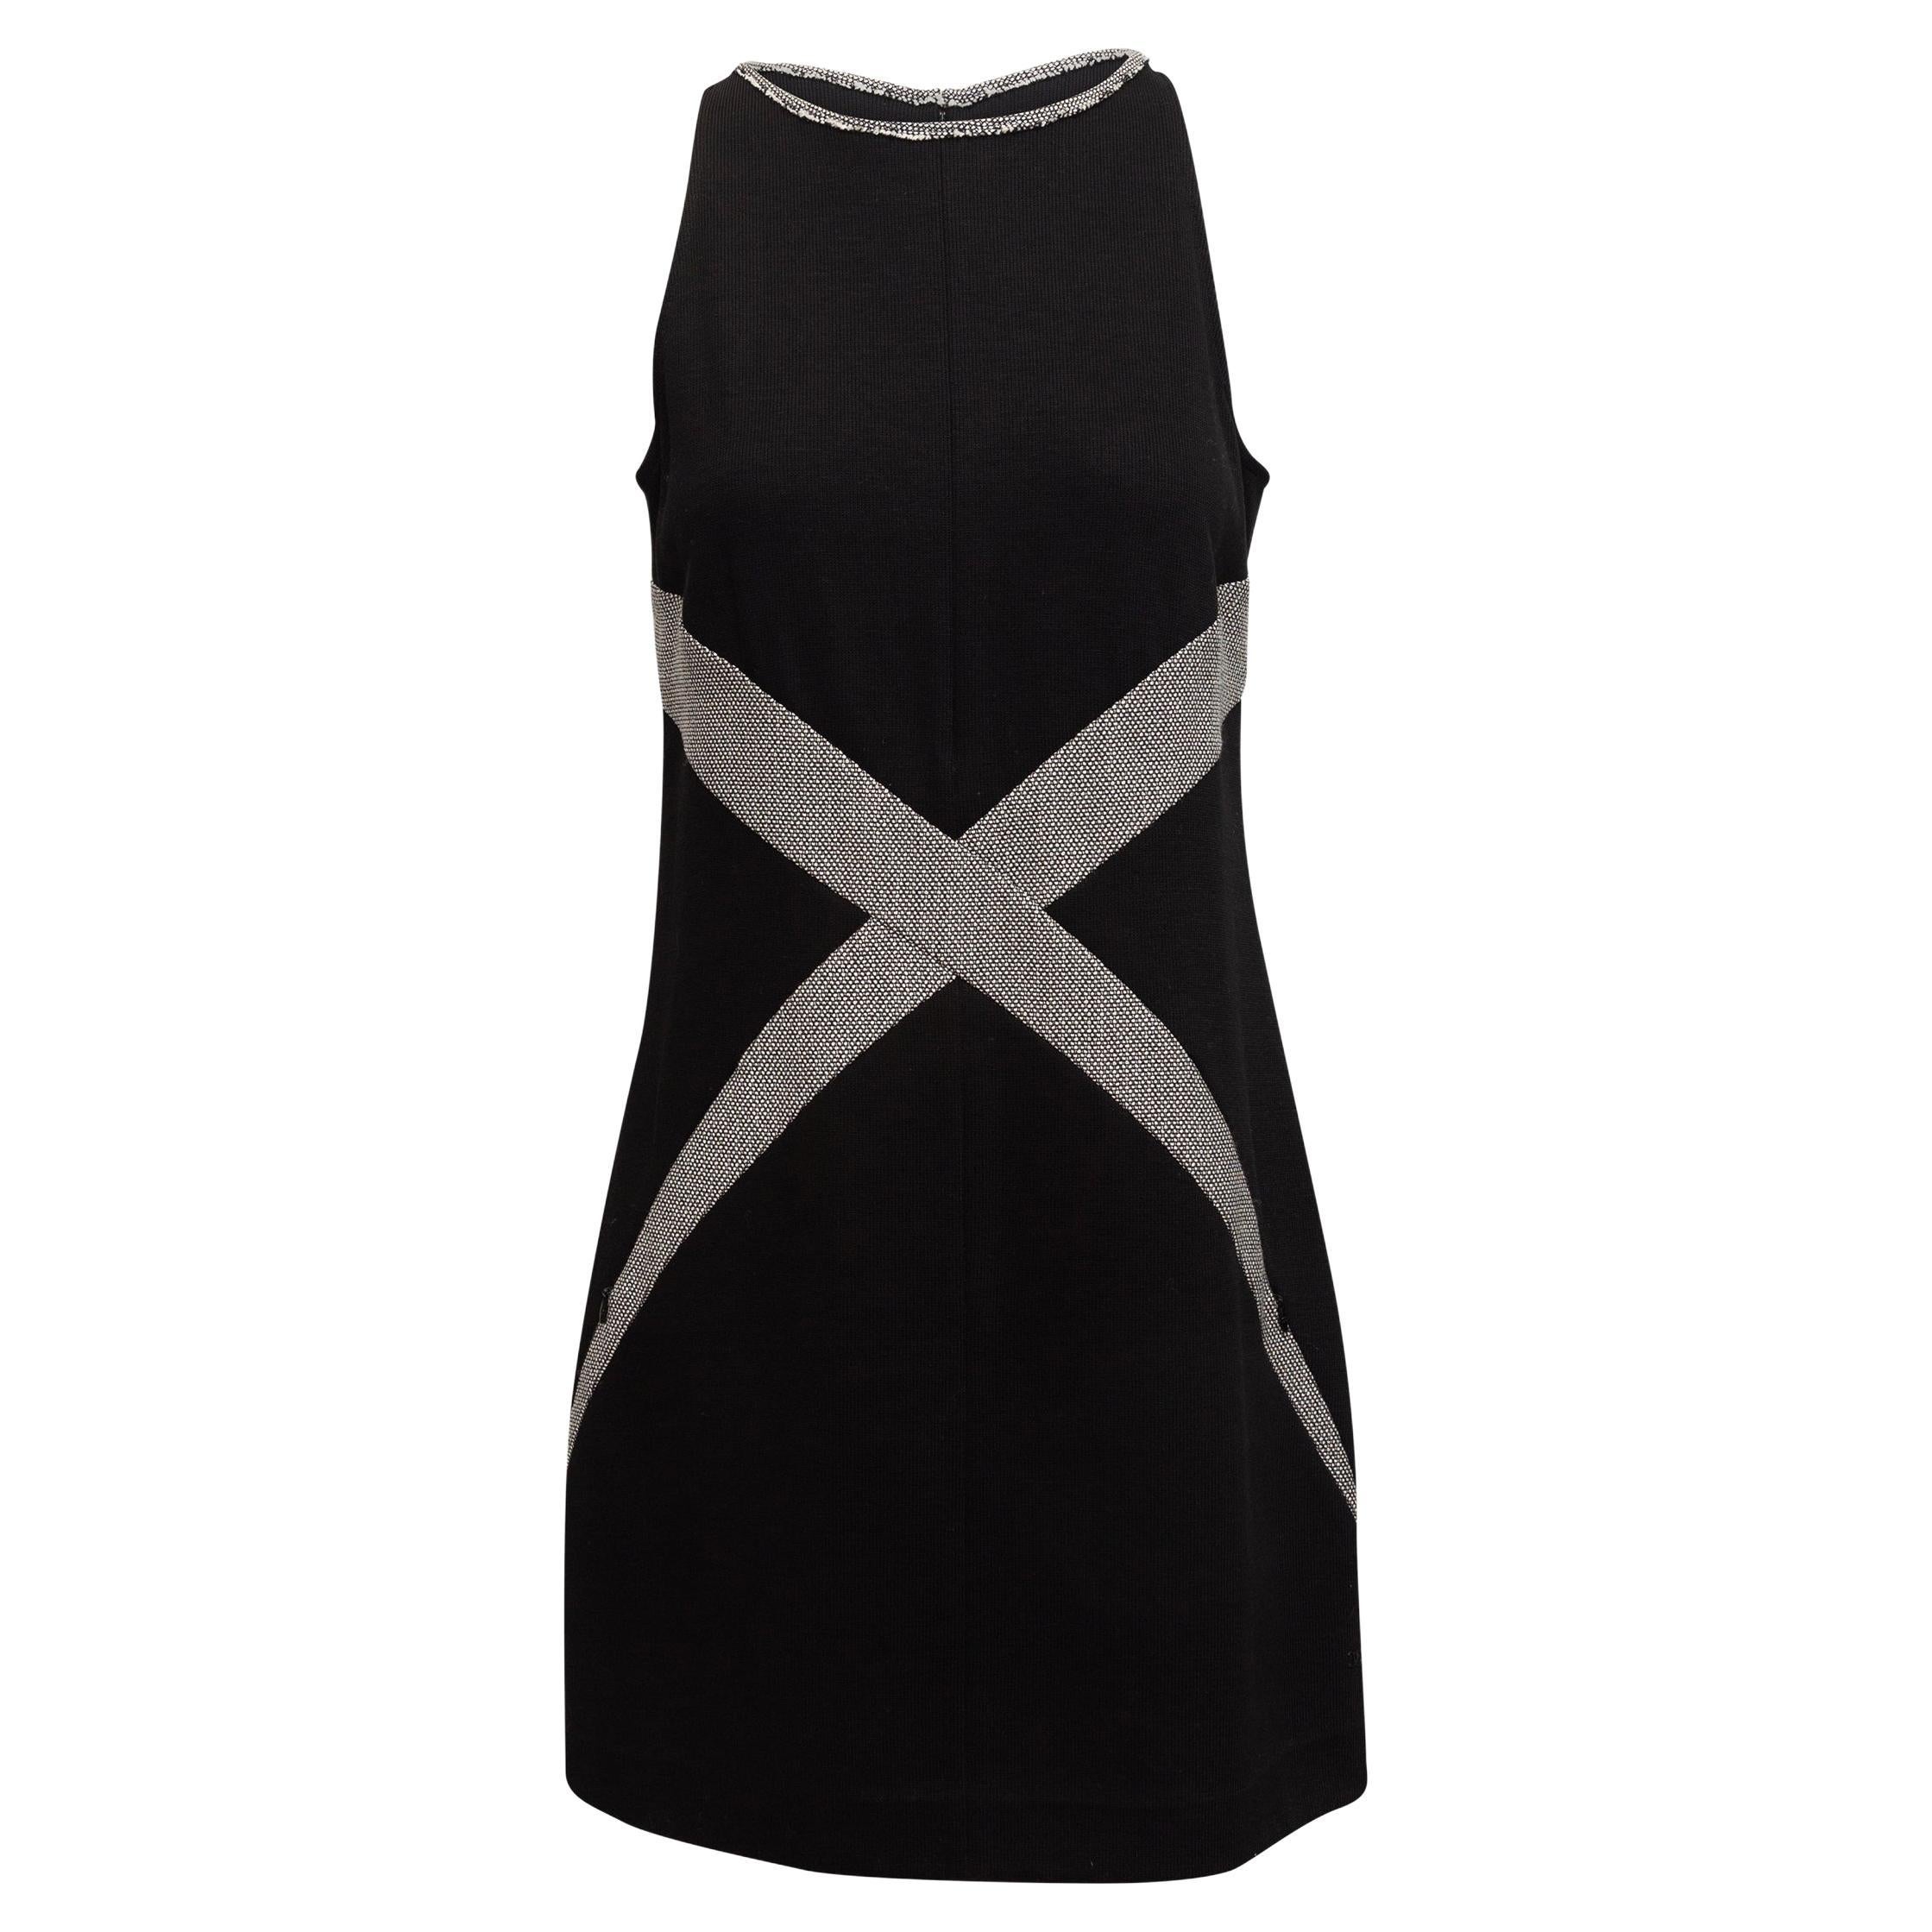  Chanel Black & Grey Sleeveless Dress